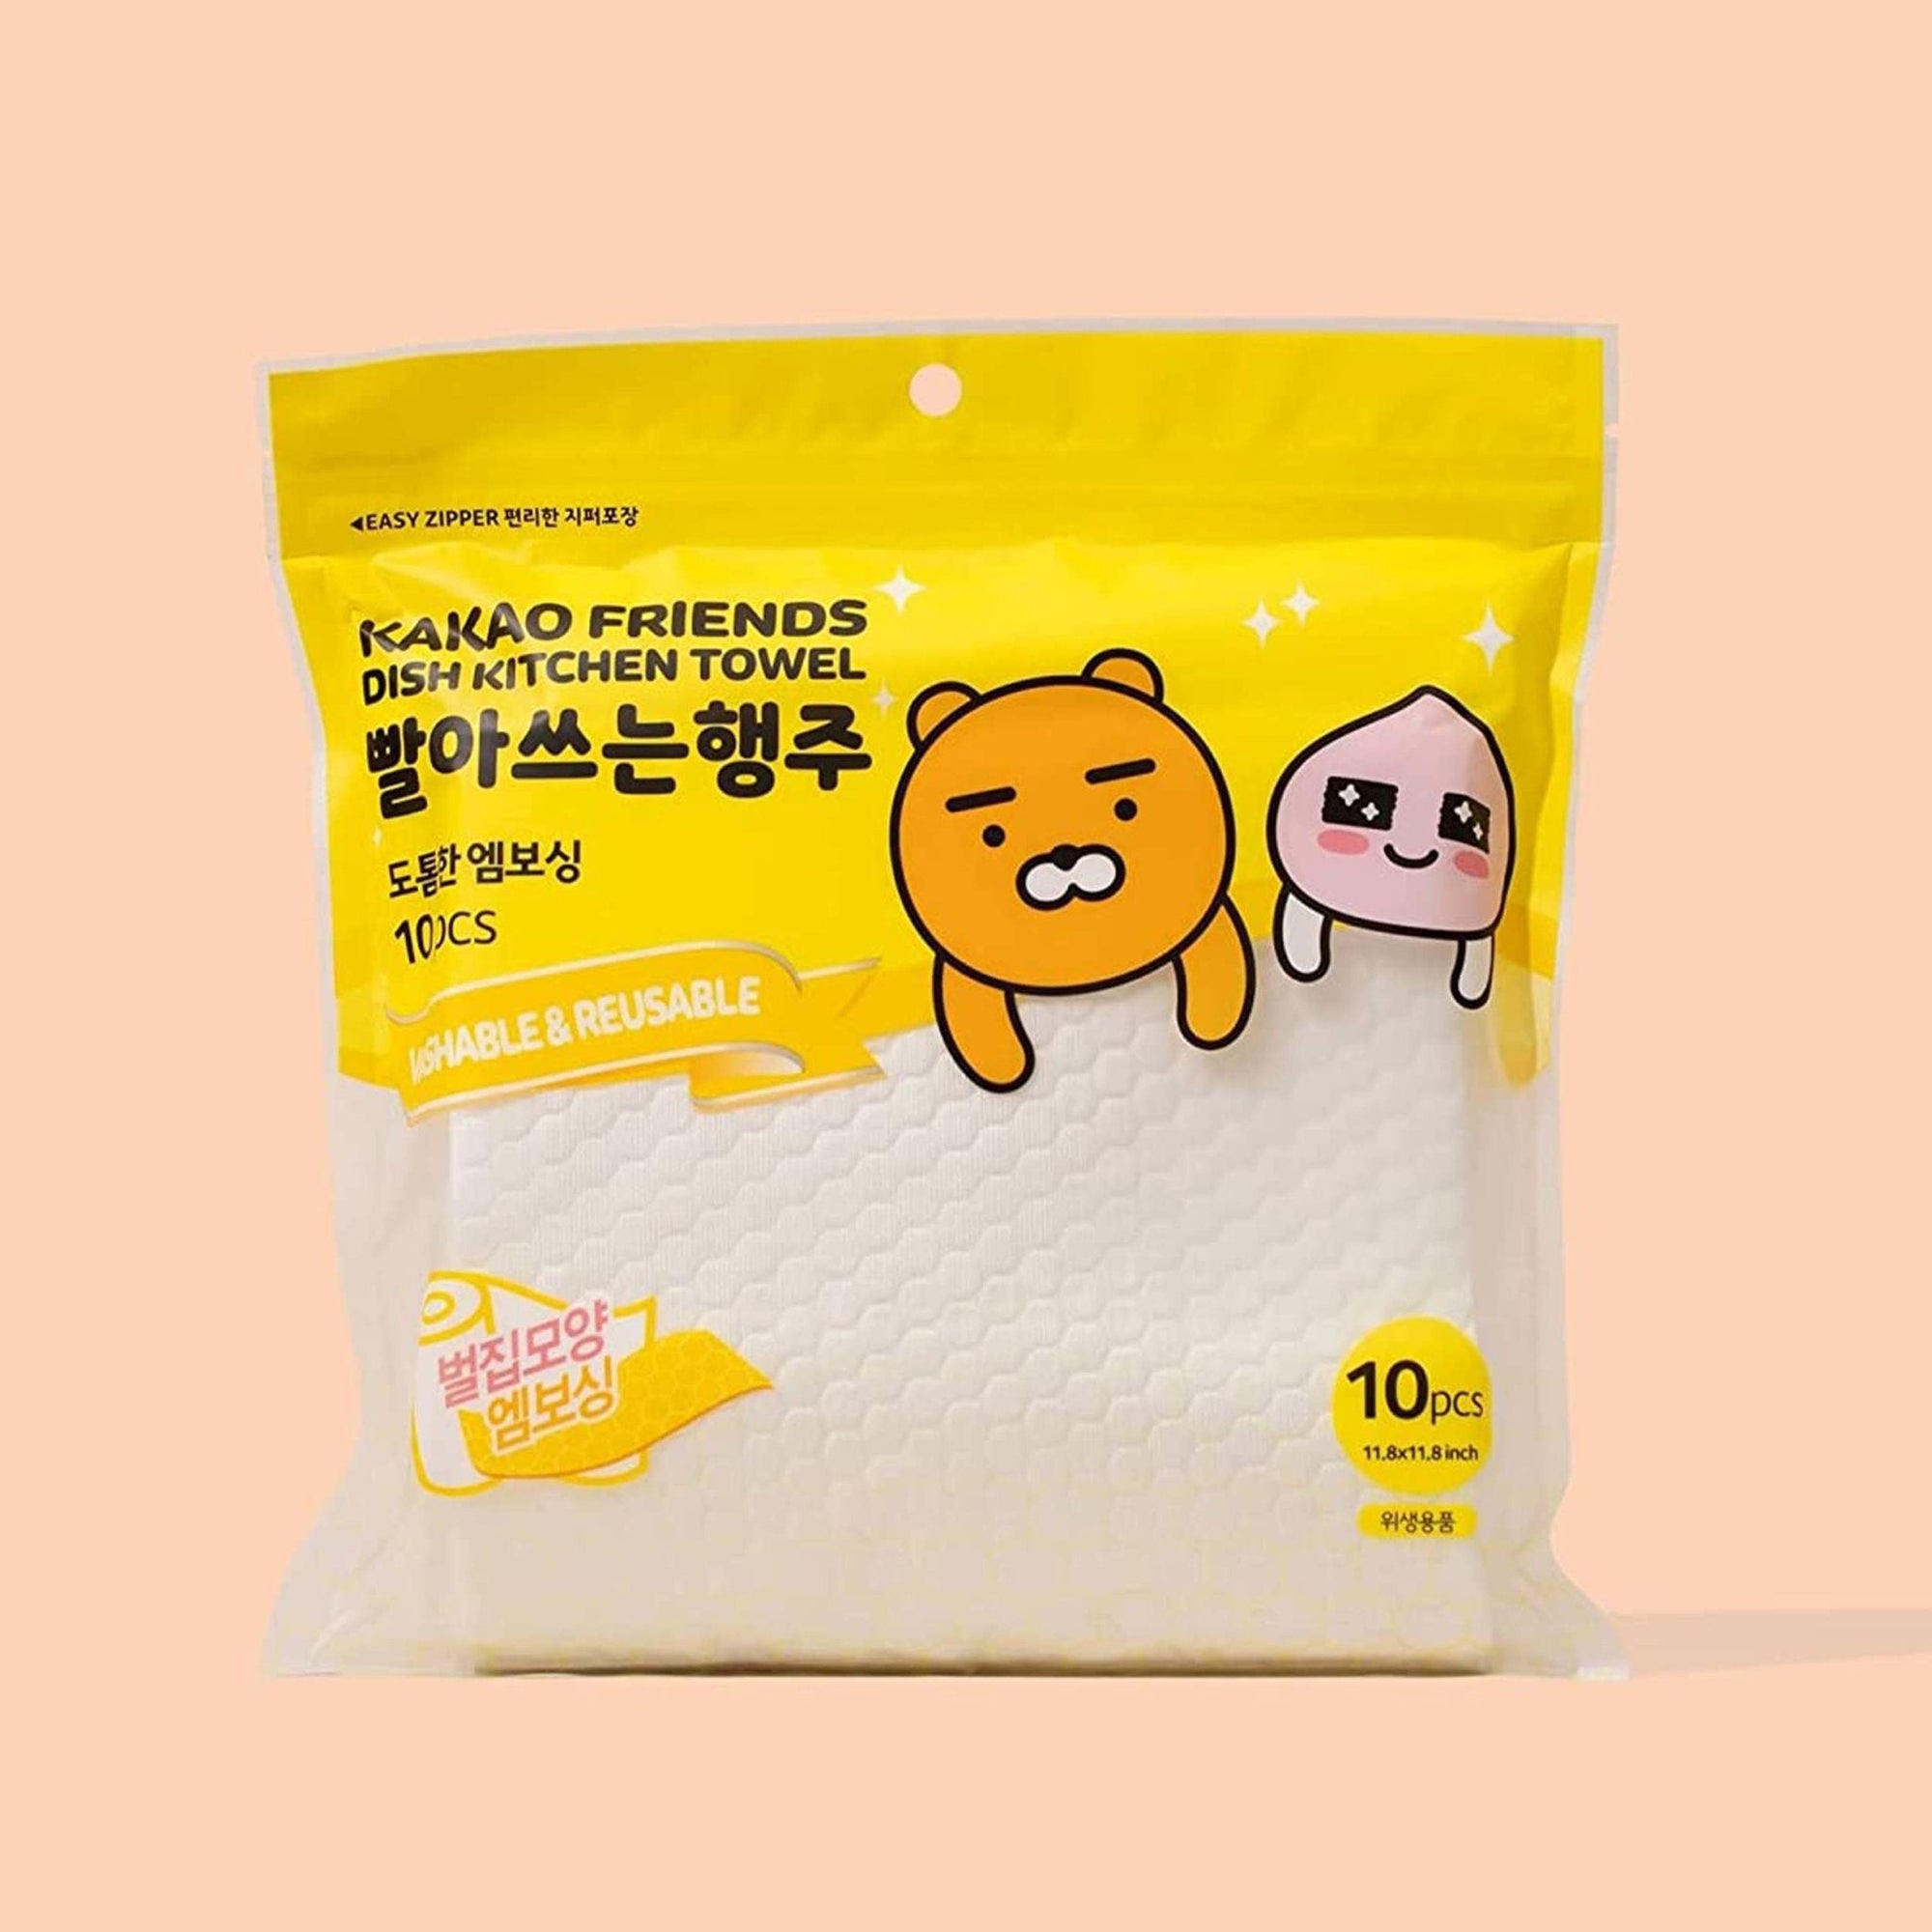 KAKAO FRIENDS Reusable Dish Kitchen Towel 4 Pack Set - SkoopMarket